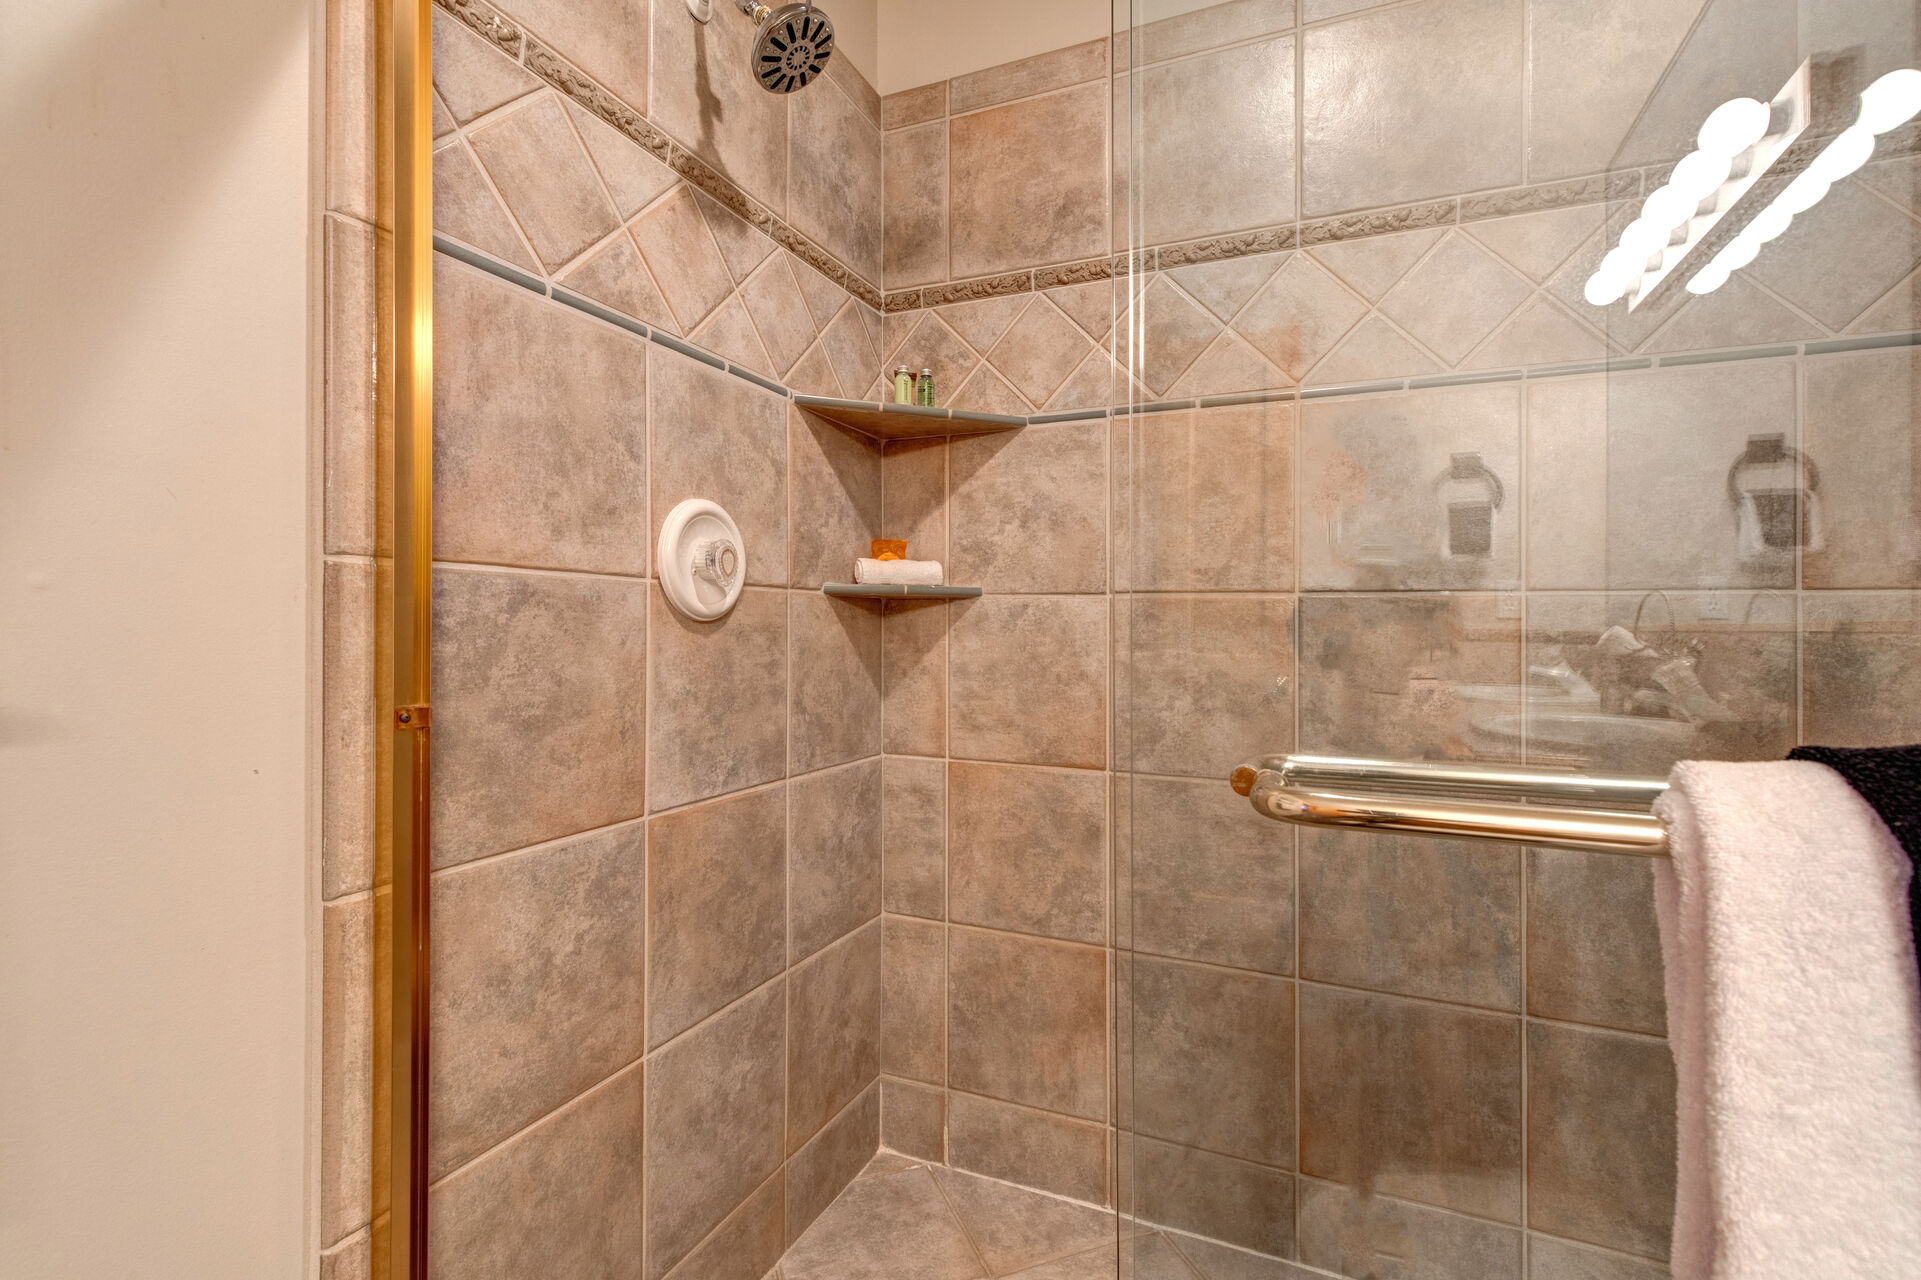 Main Level Shared Full Bathroom with over-sized tile shower